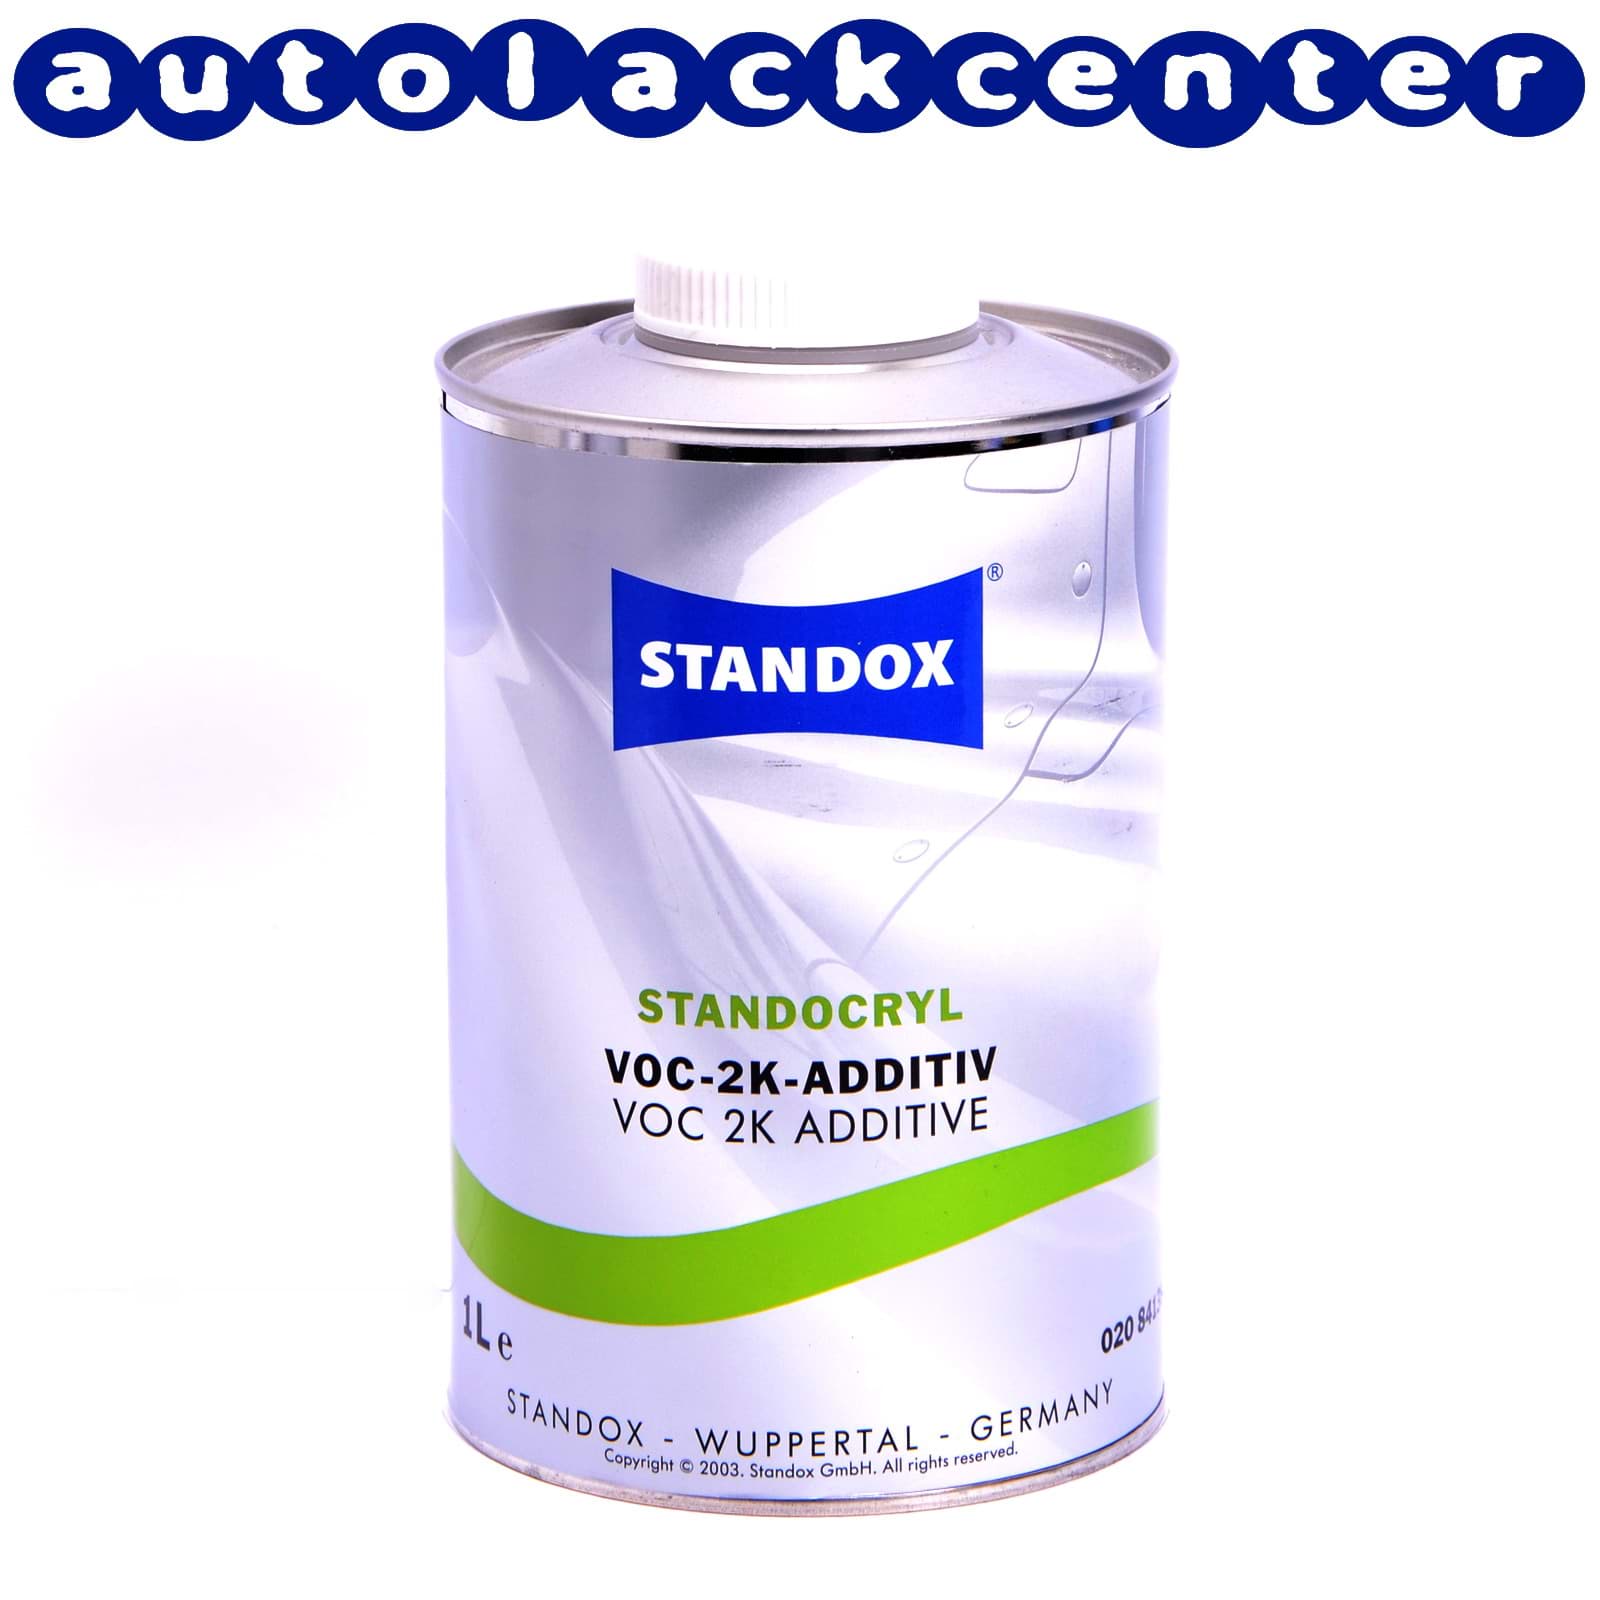 Picture of Standox Standocryl VOC-2K-Additiv 1Liter